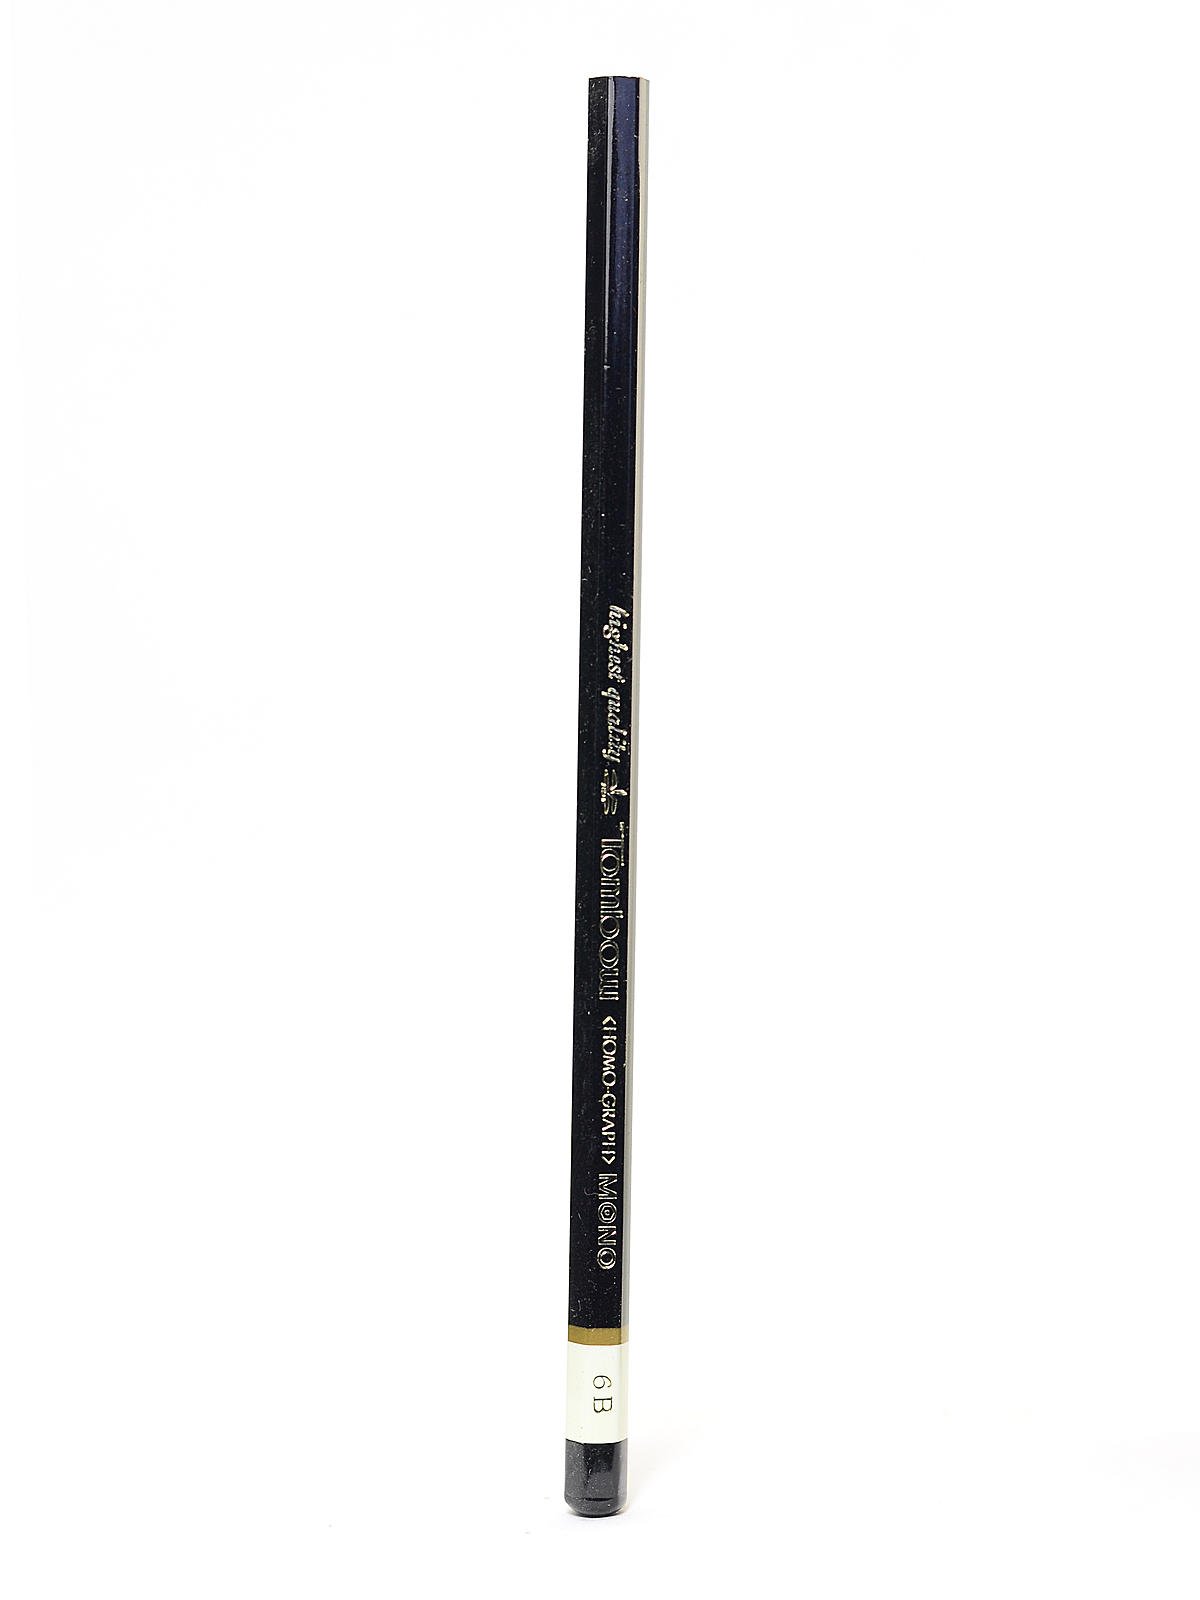 Tombow Mono Graphite Pencil Set of 12 - 6H to 6B